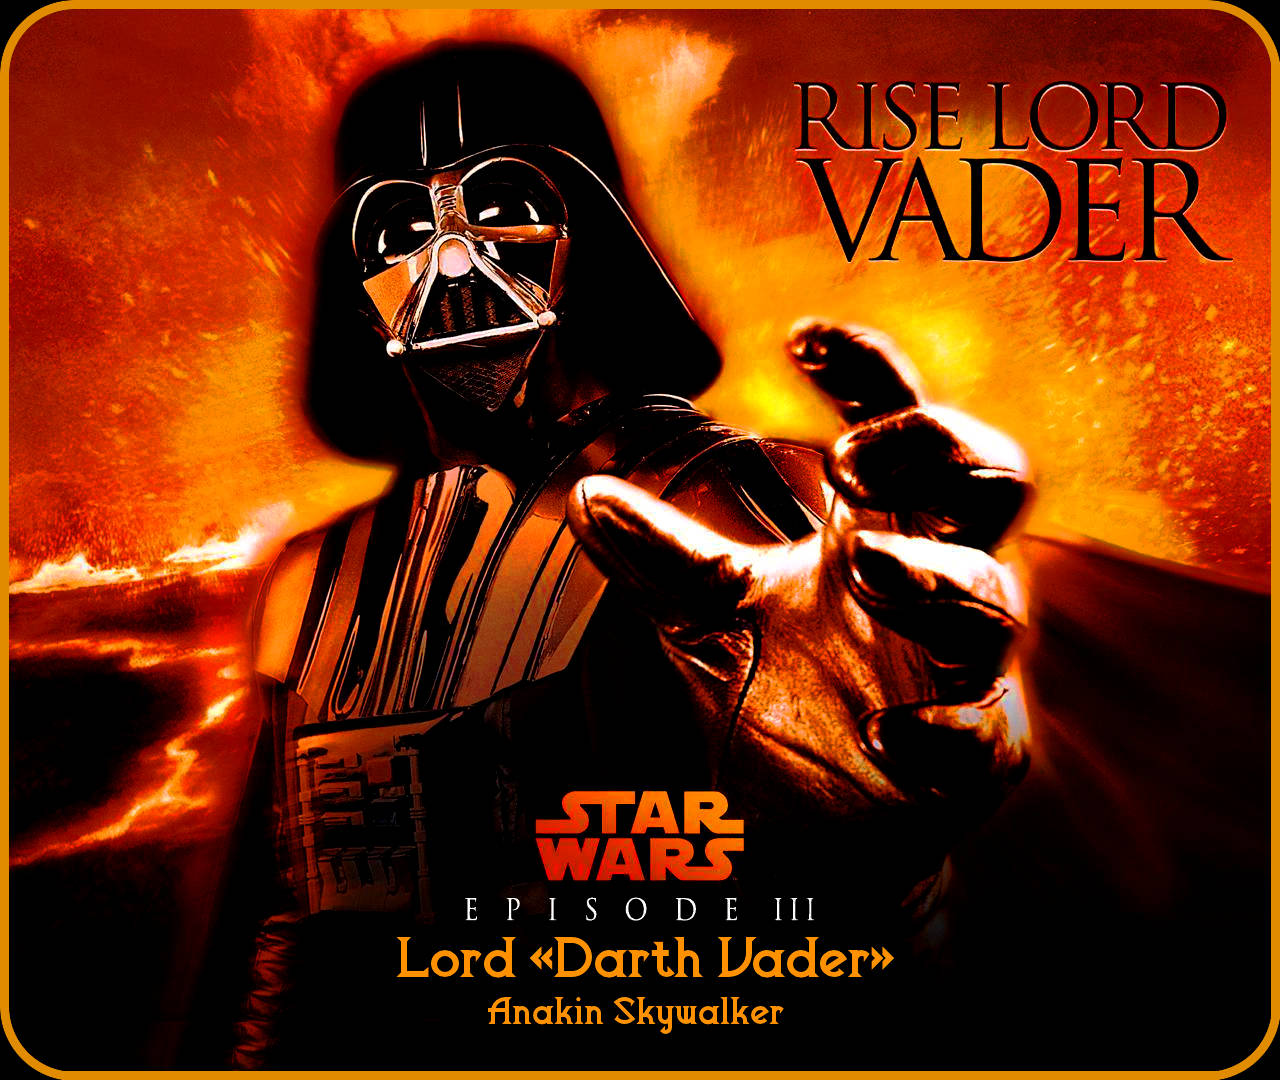 Cool Star Wars Anakin Skywalker Darth Vader Wallpaper